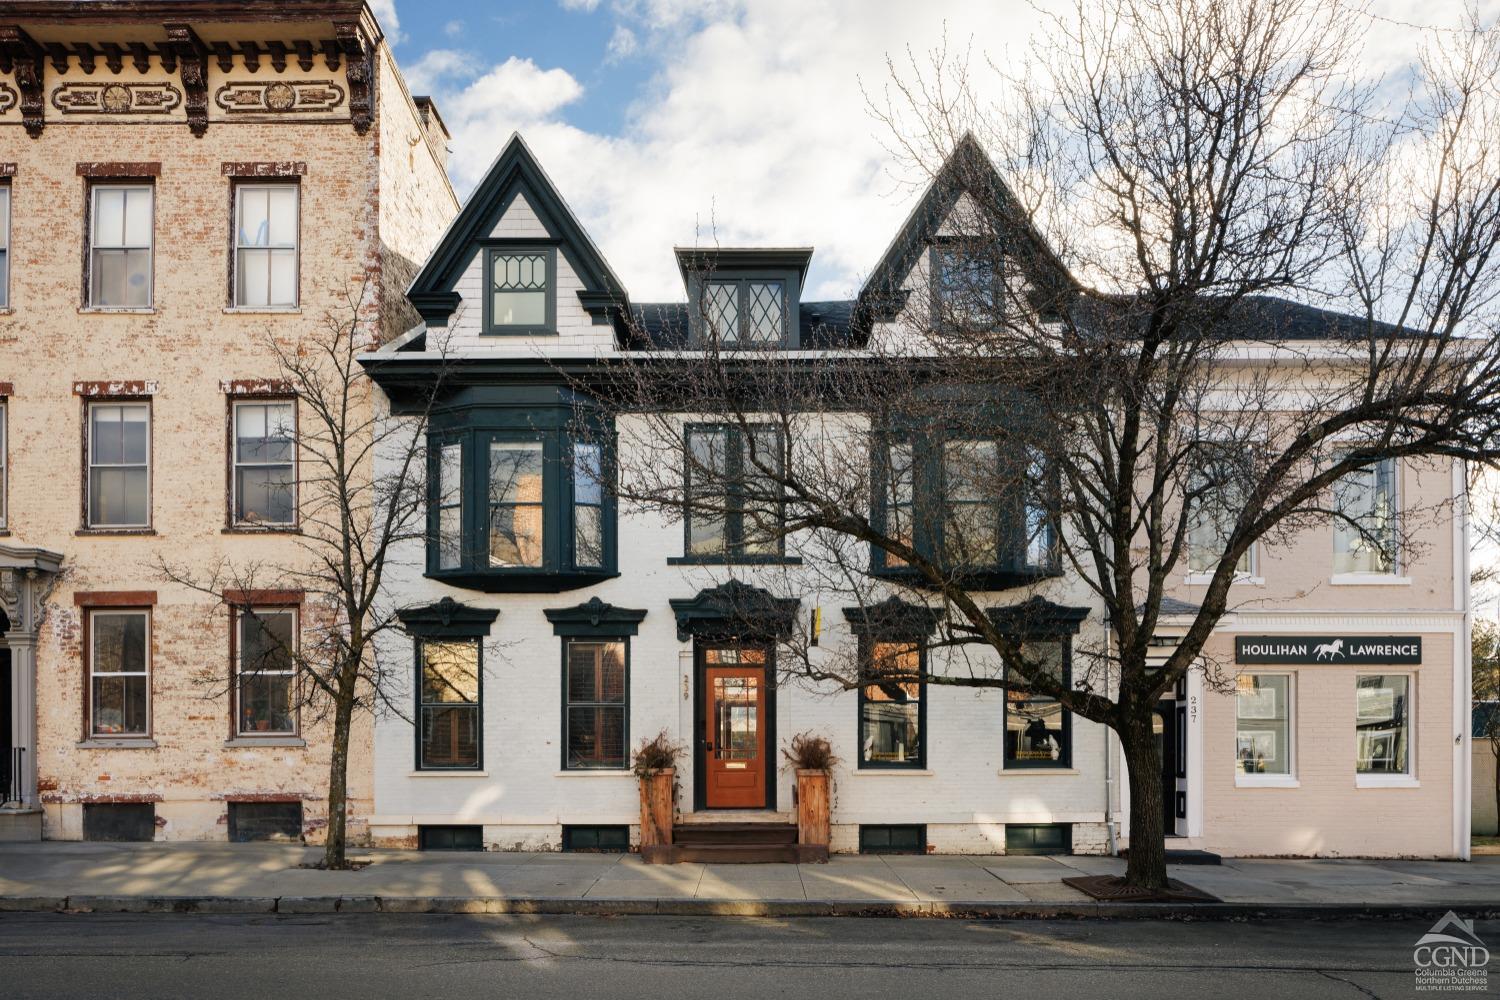 Property for Sale at 239 Warren St, Hudson, New York - Bedrooms: 4 
Bathrooms: 5 
Rooms: 16  - $1,800,000